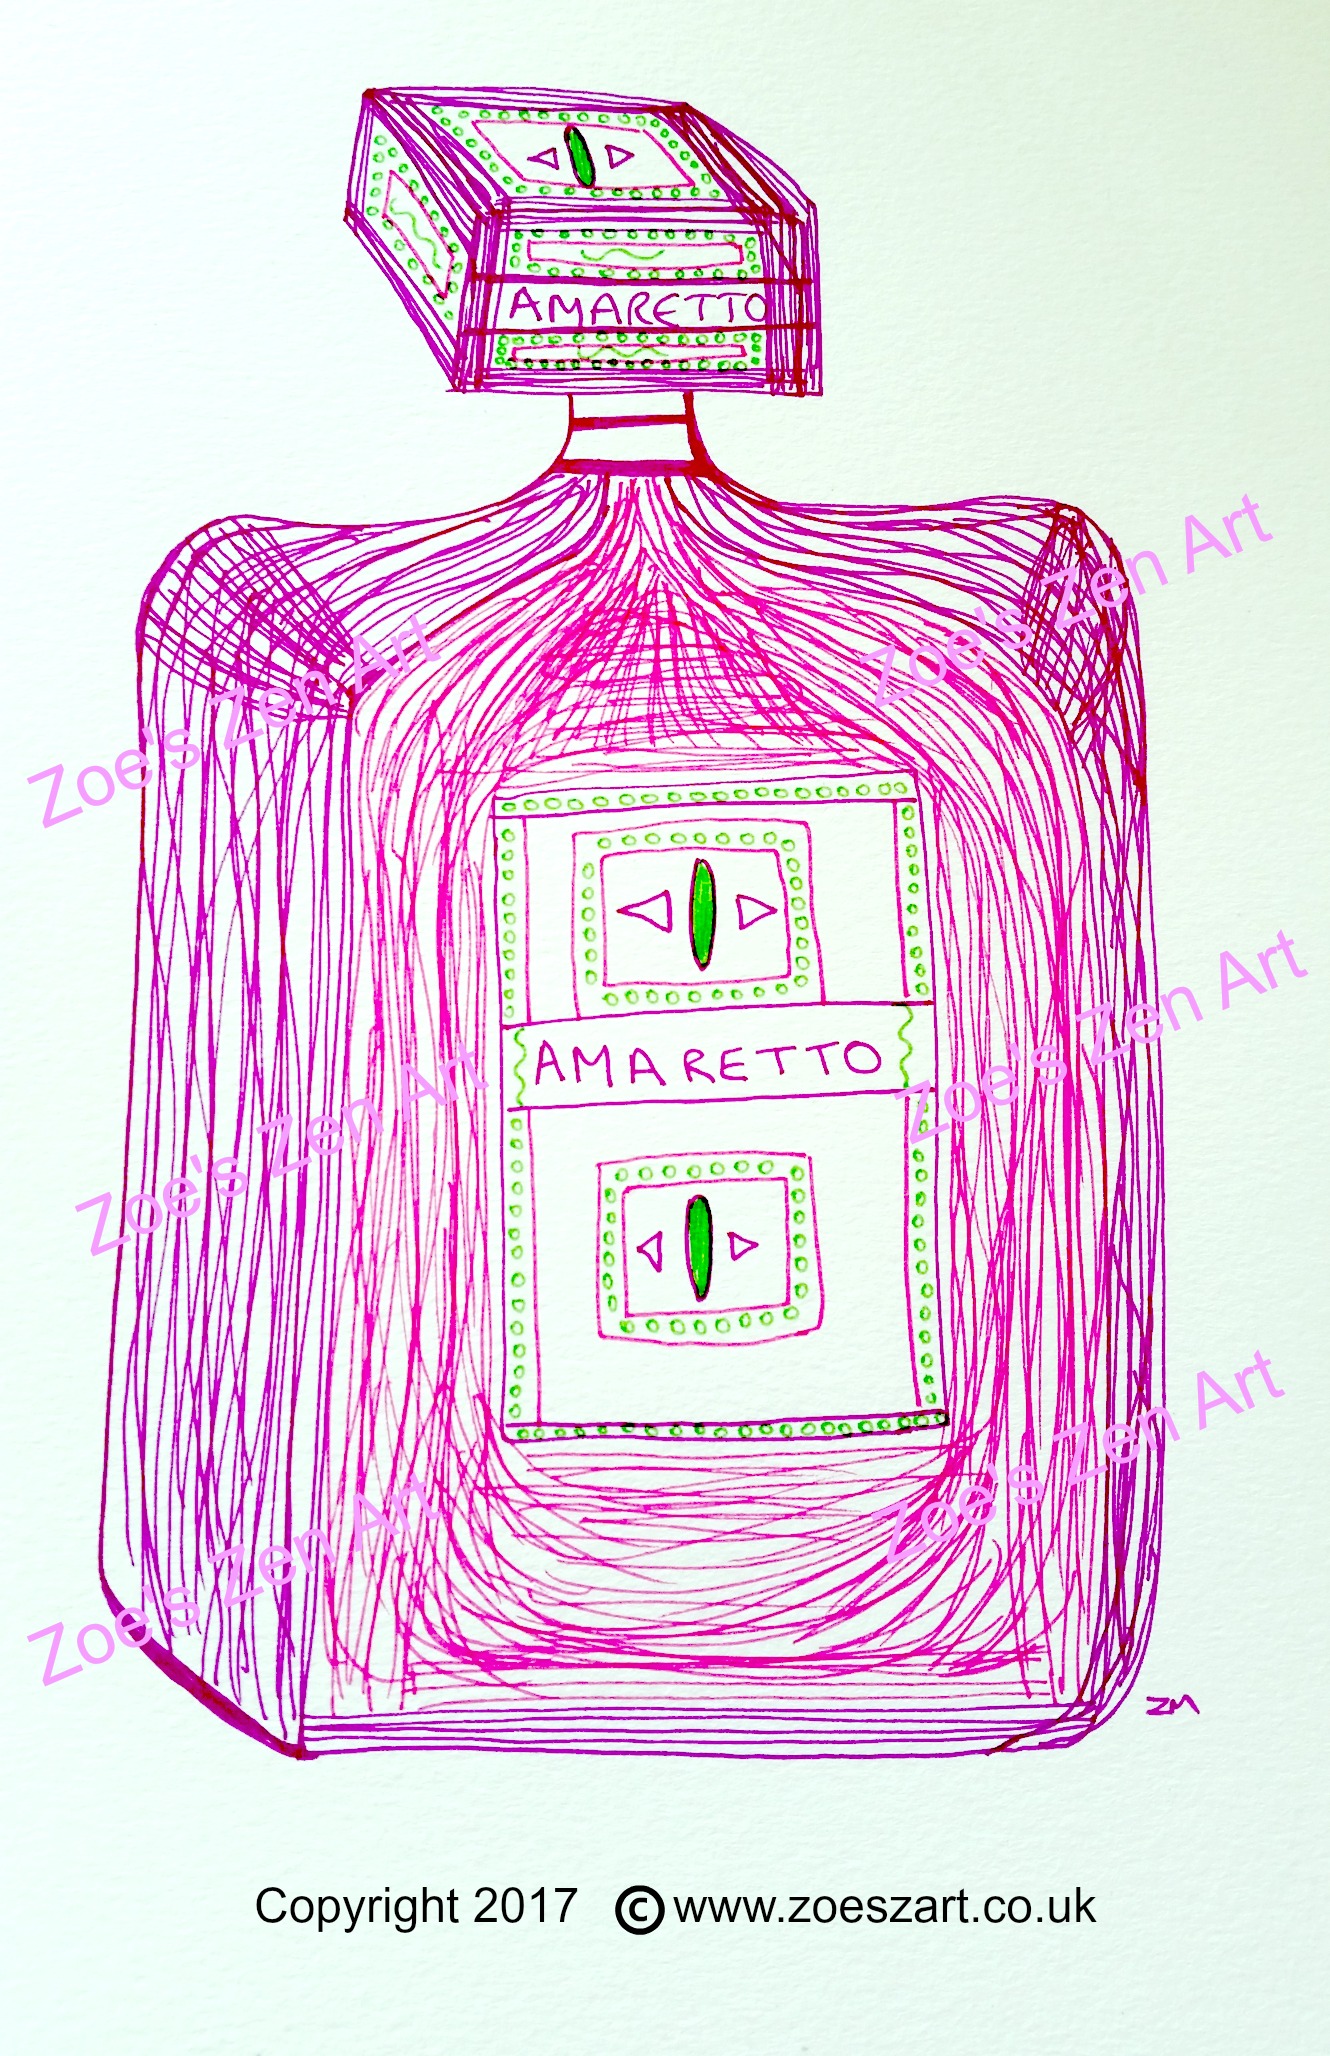 amaretto, drawing, zen art, bottle